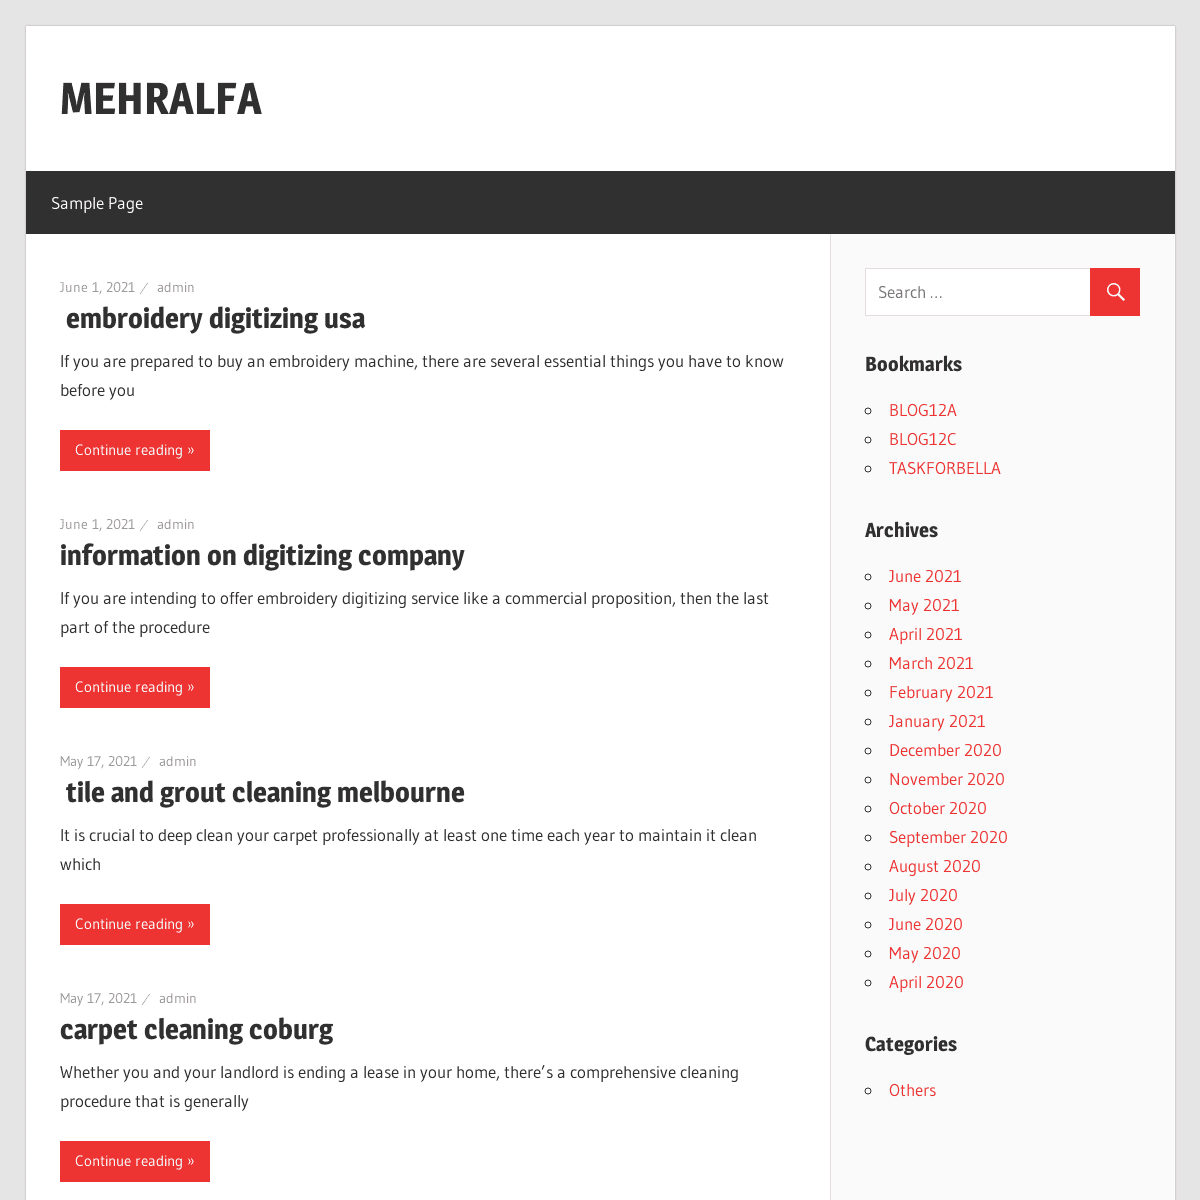 A complete backup of https://mehralfa.com